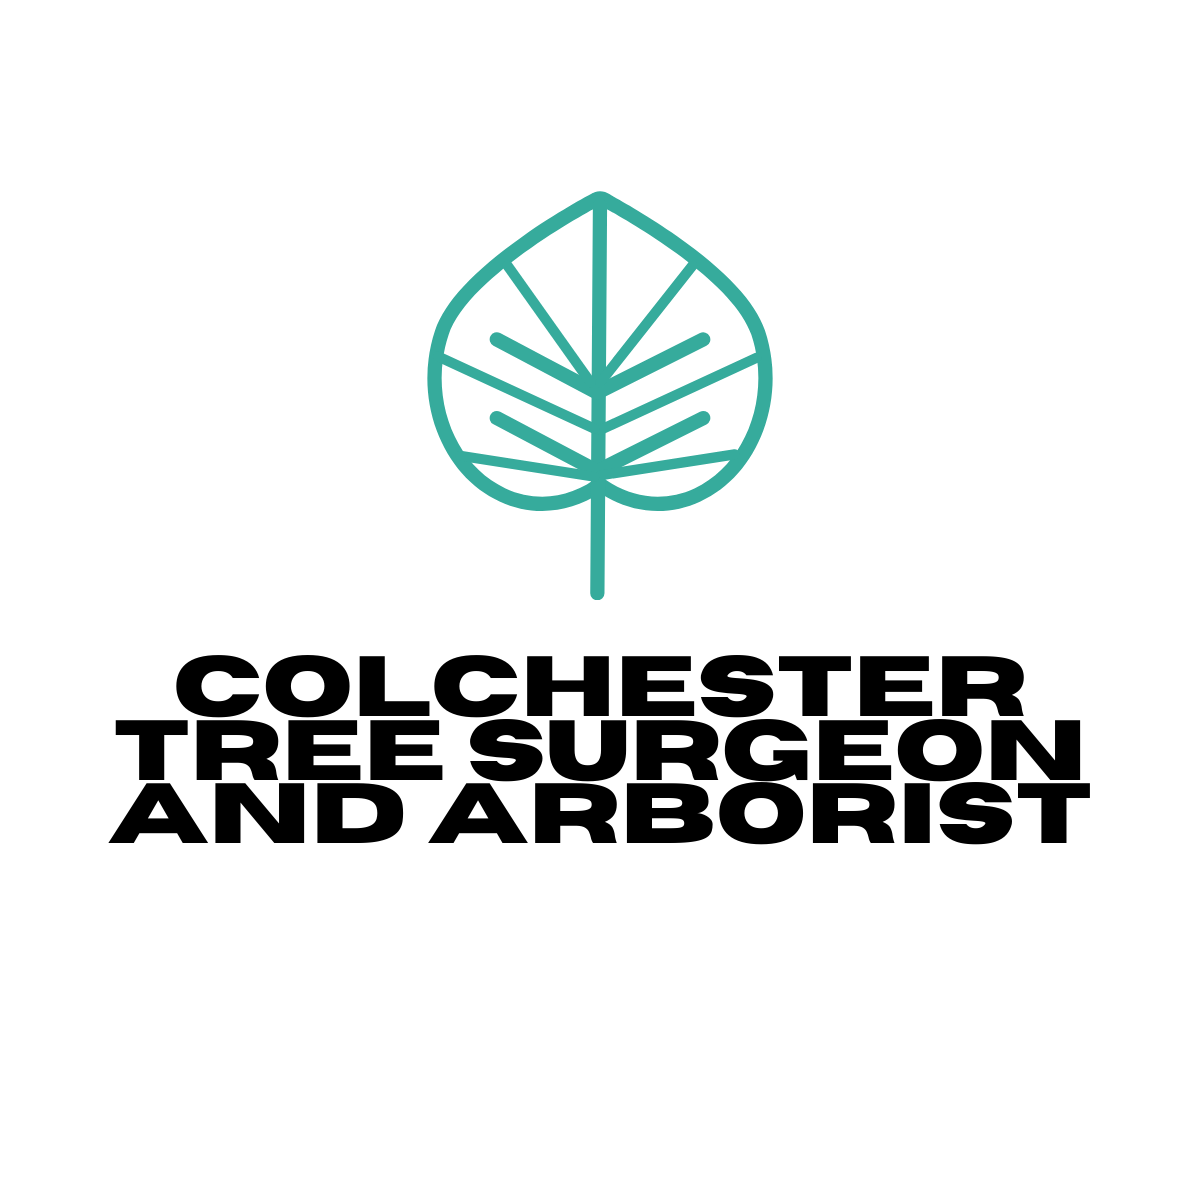 Colchester Tree Surgeon And Arborist